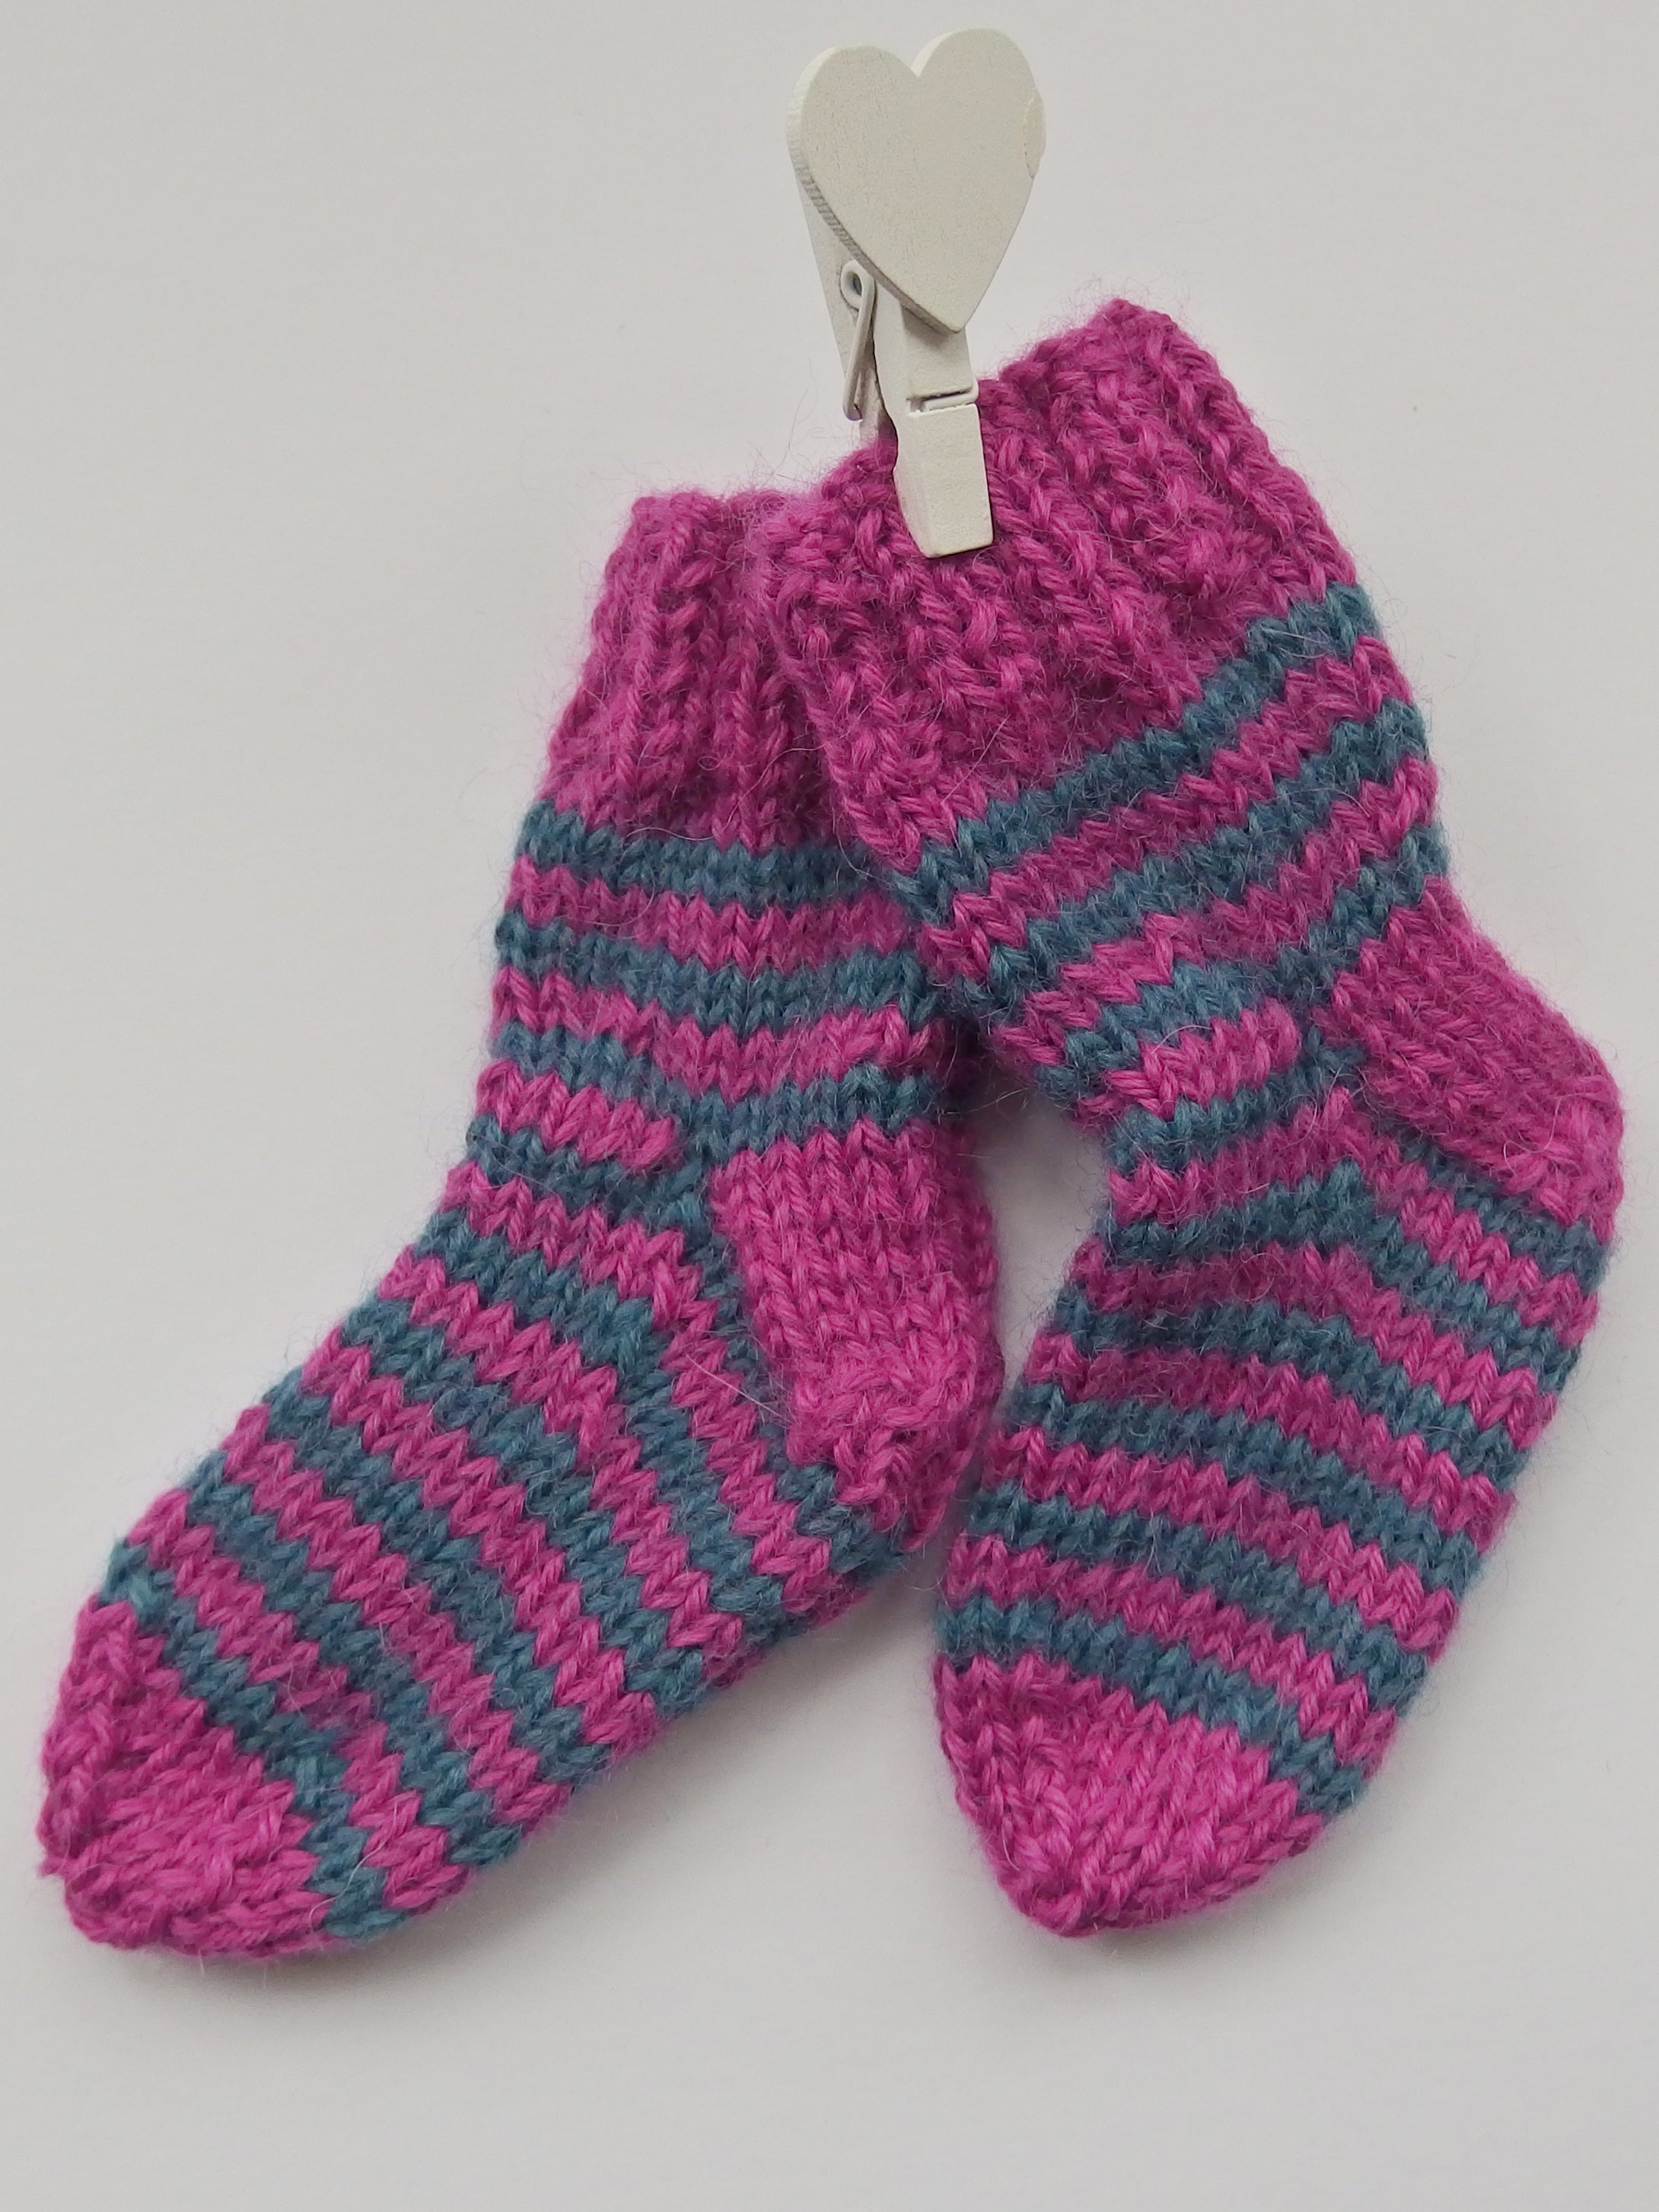 Baby Socks - made using 100% baby merino wool: fushia & teal